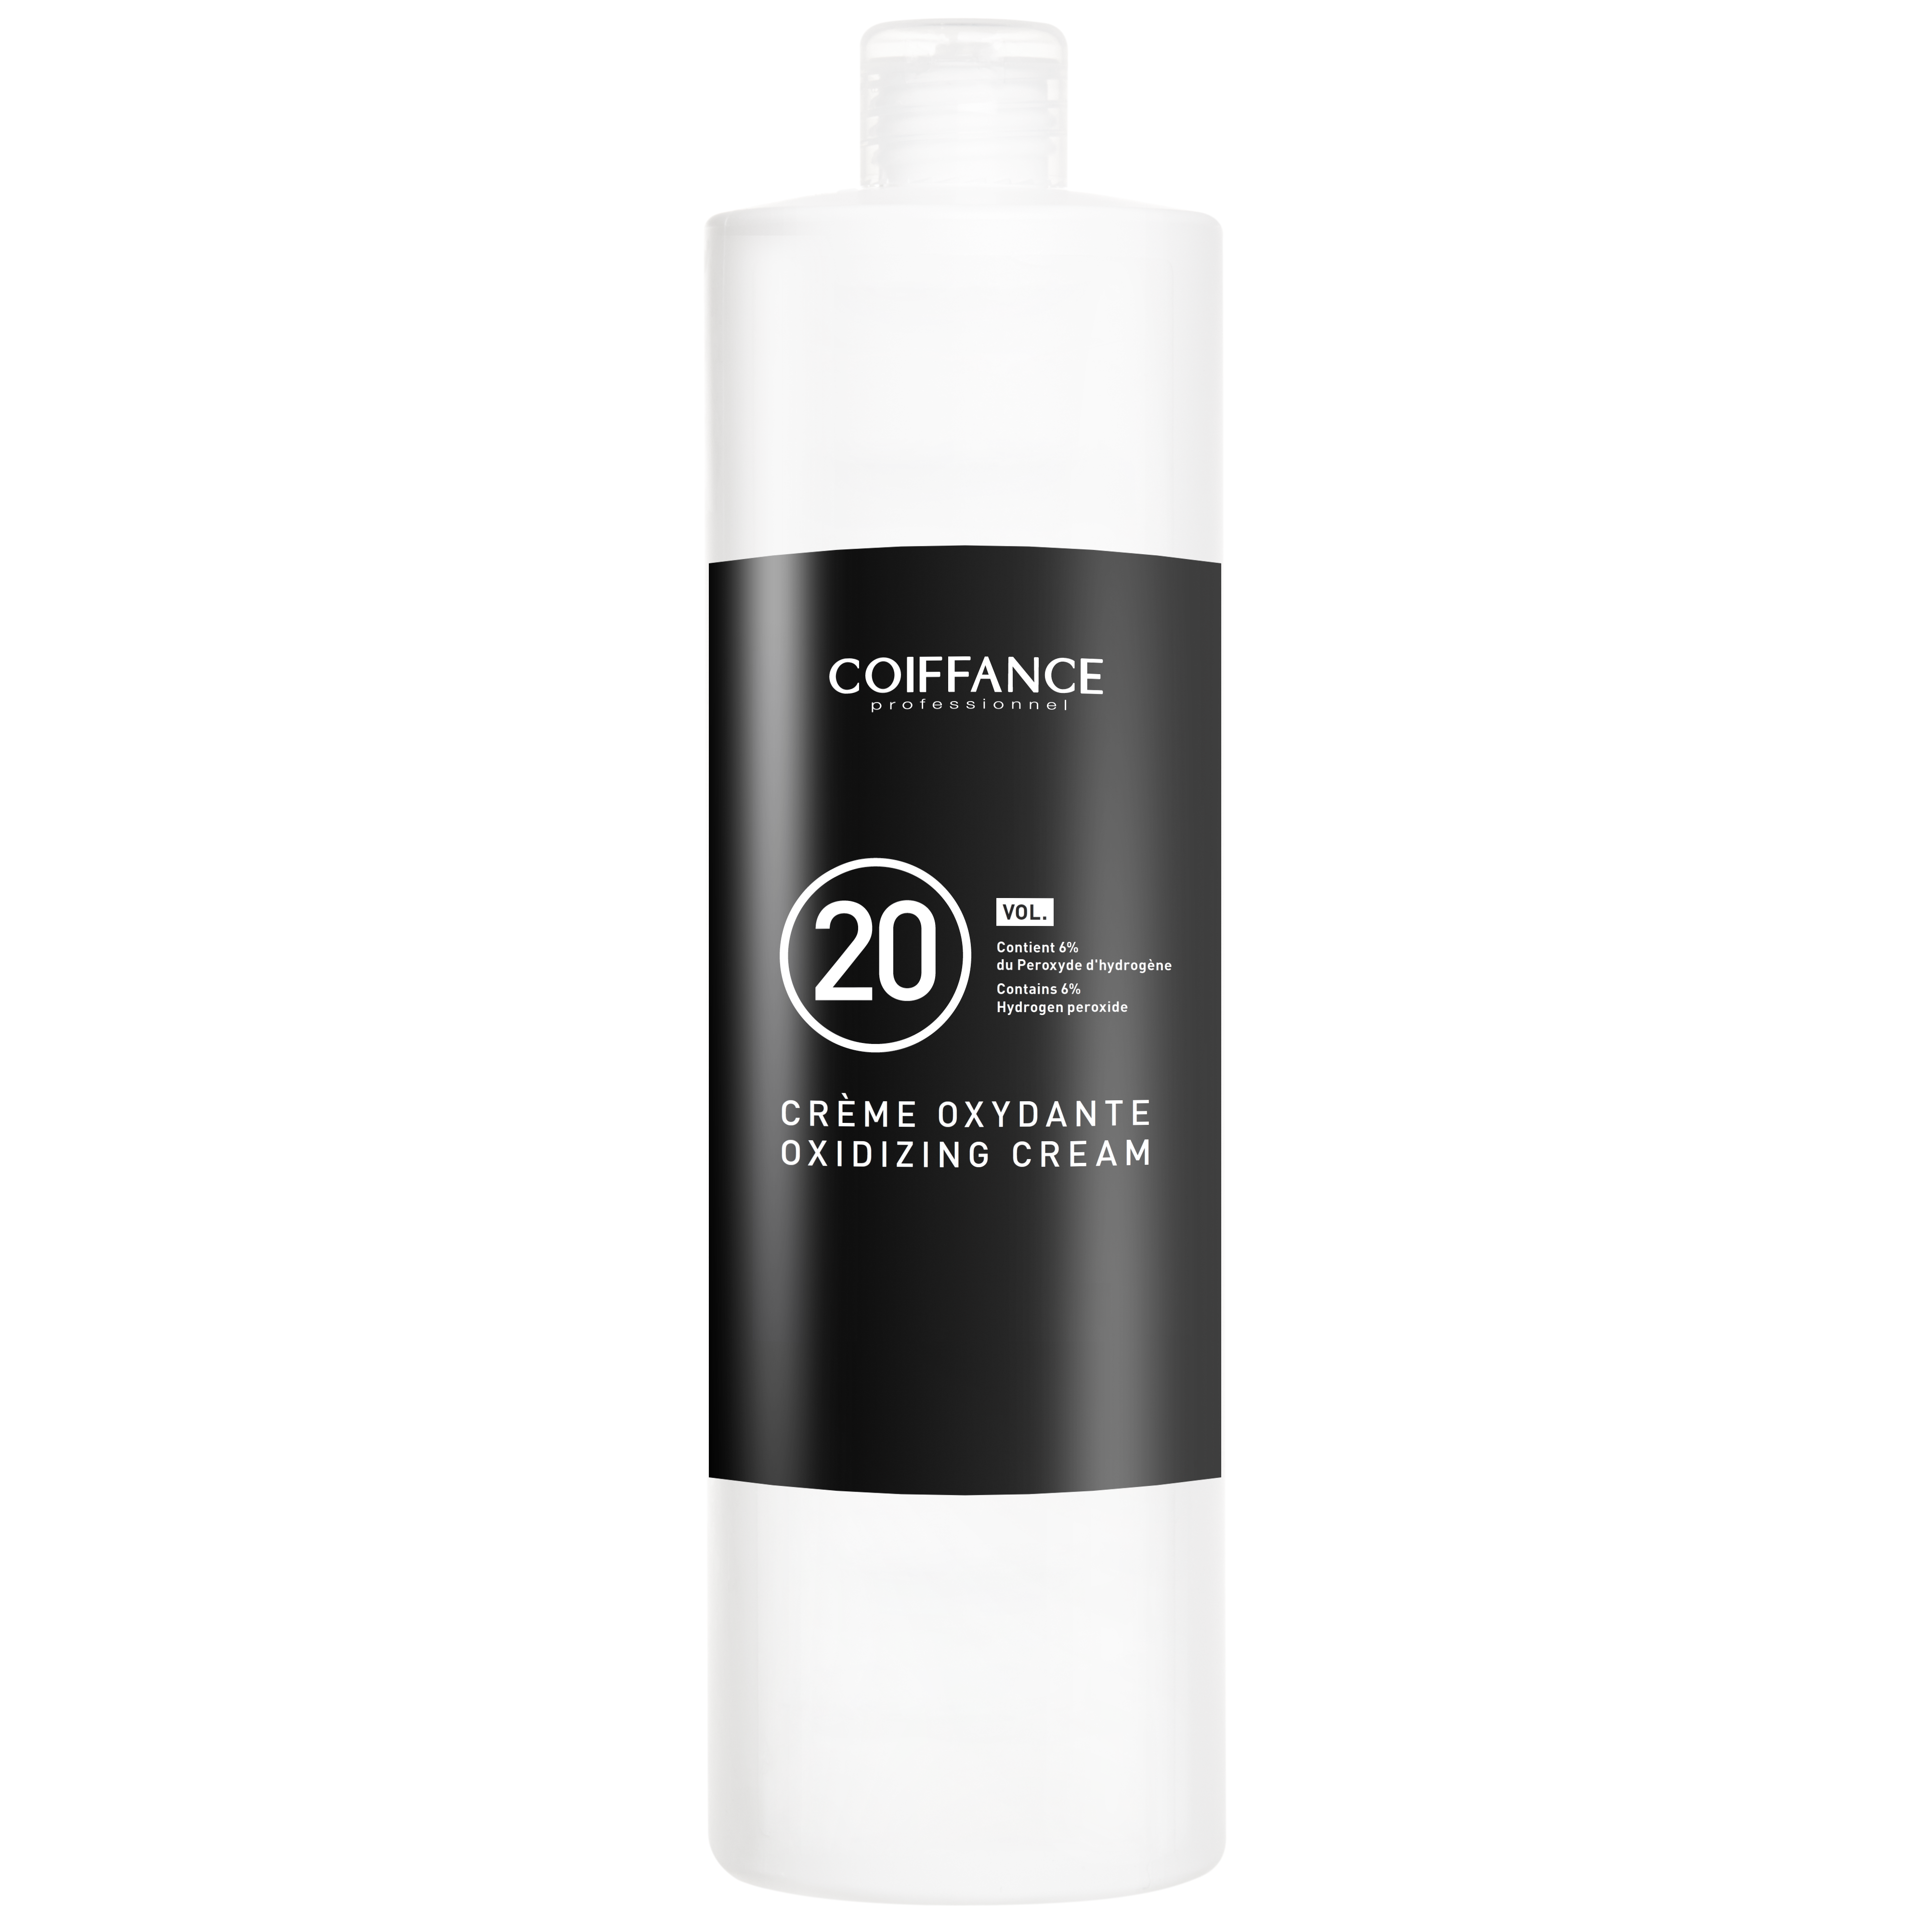 COIFFANCE, Крем-оксидант VOL20 (6%) Color Oxidising Cream, 150 мл.